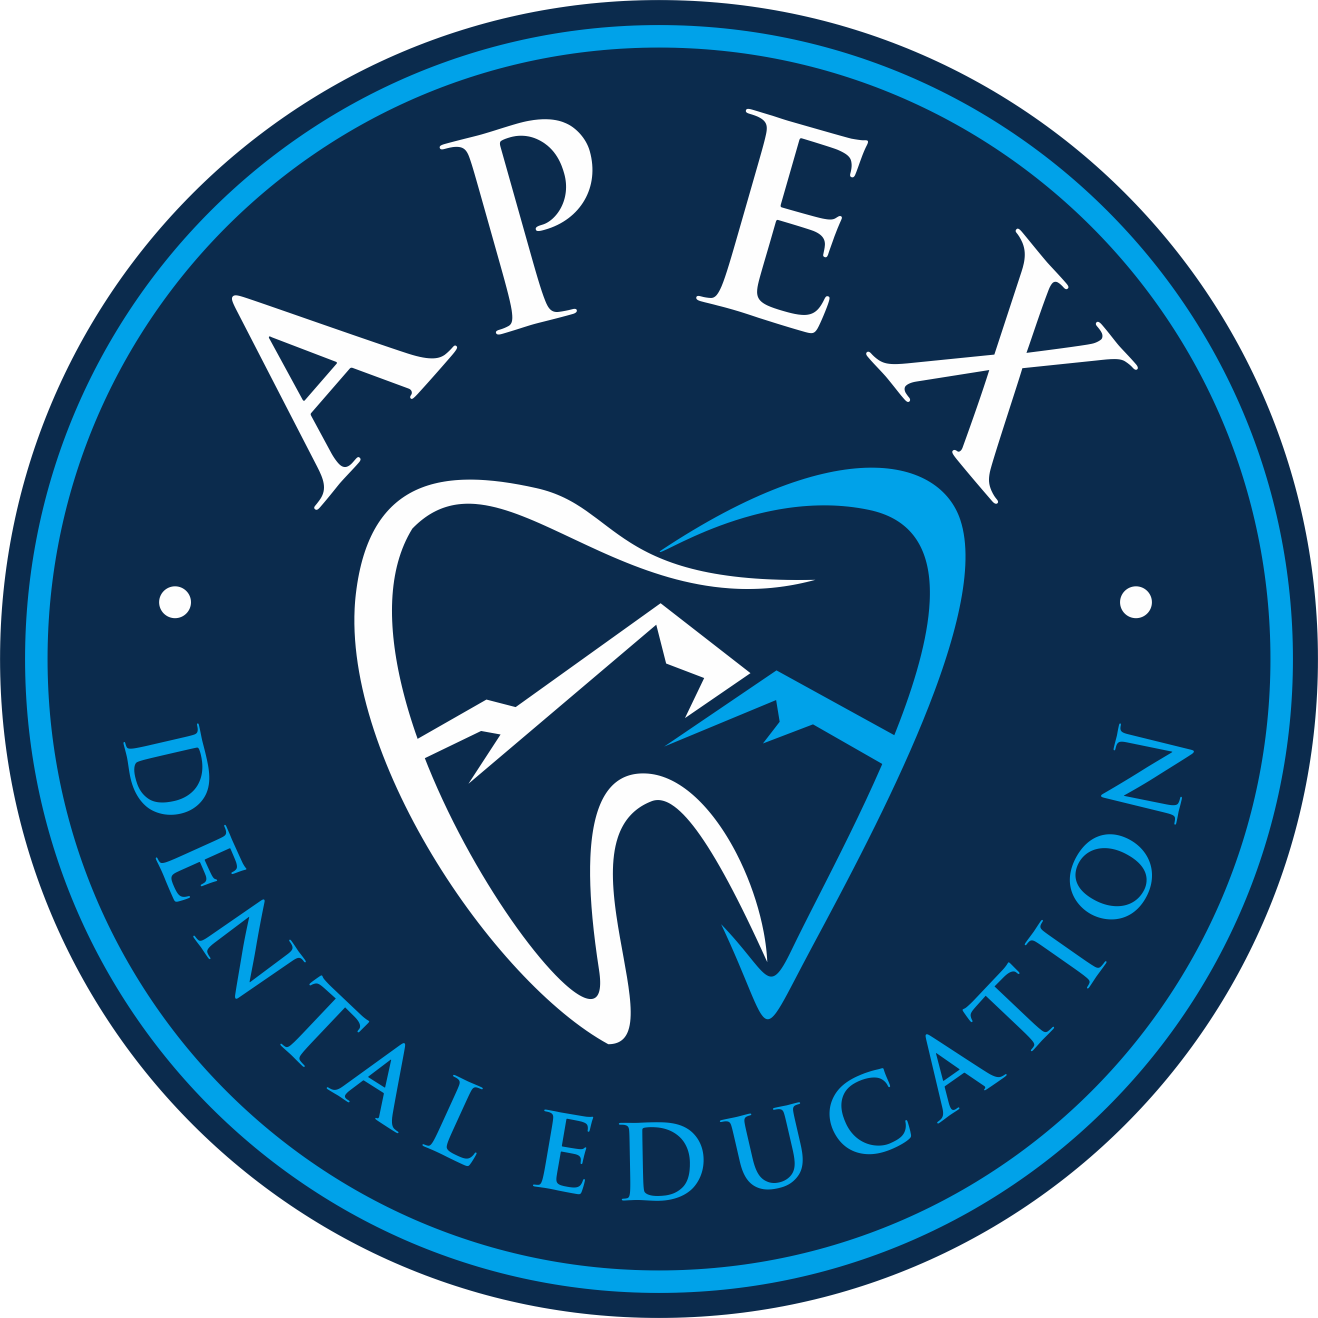 APEX Dental Education